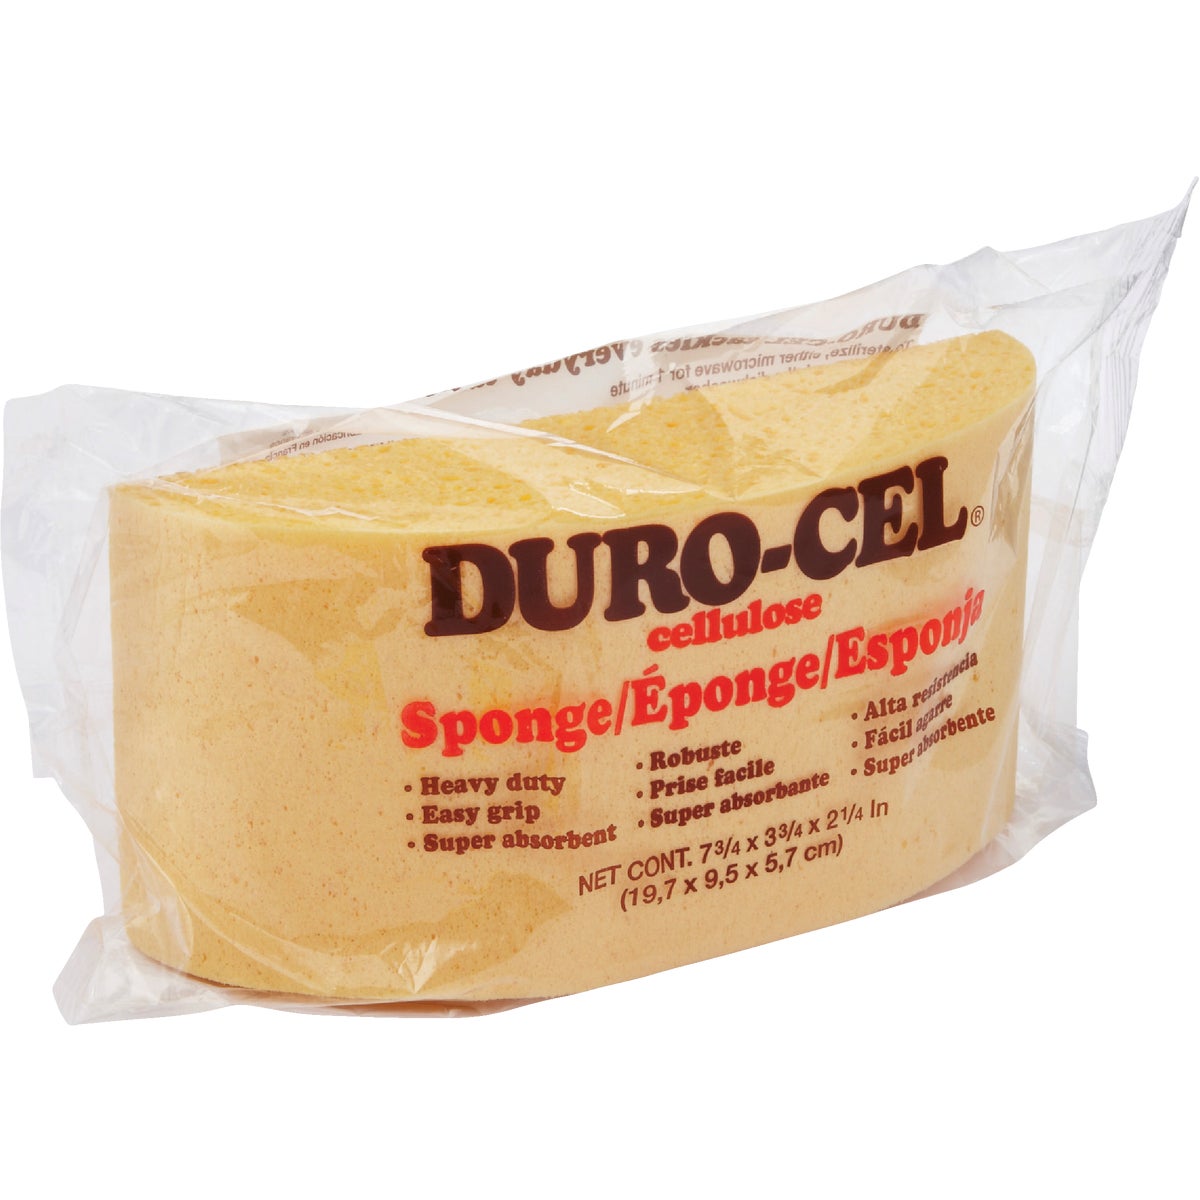 Duro-Cel 7.75 In. x 3.75 In. Yellow Turtle Back Cellulose Sponge